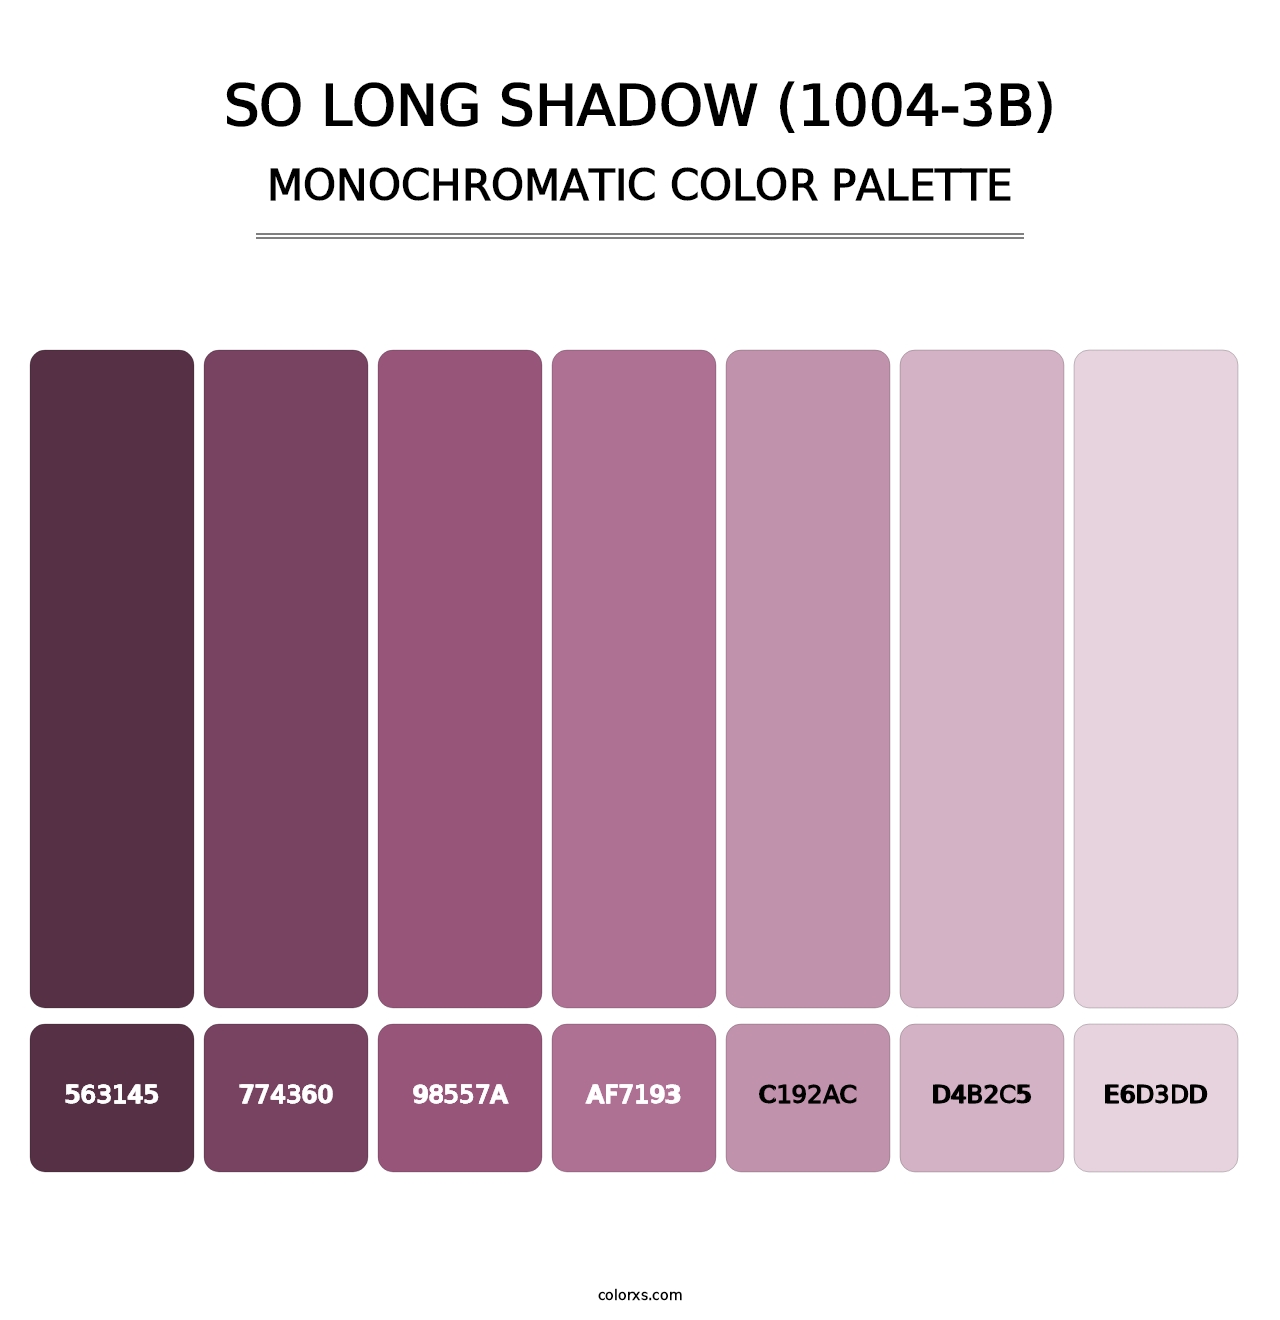 So Long Shadow (1004-3B) - Monochromatic Color Palette